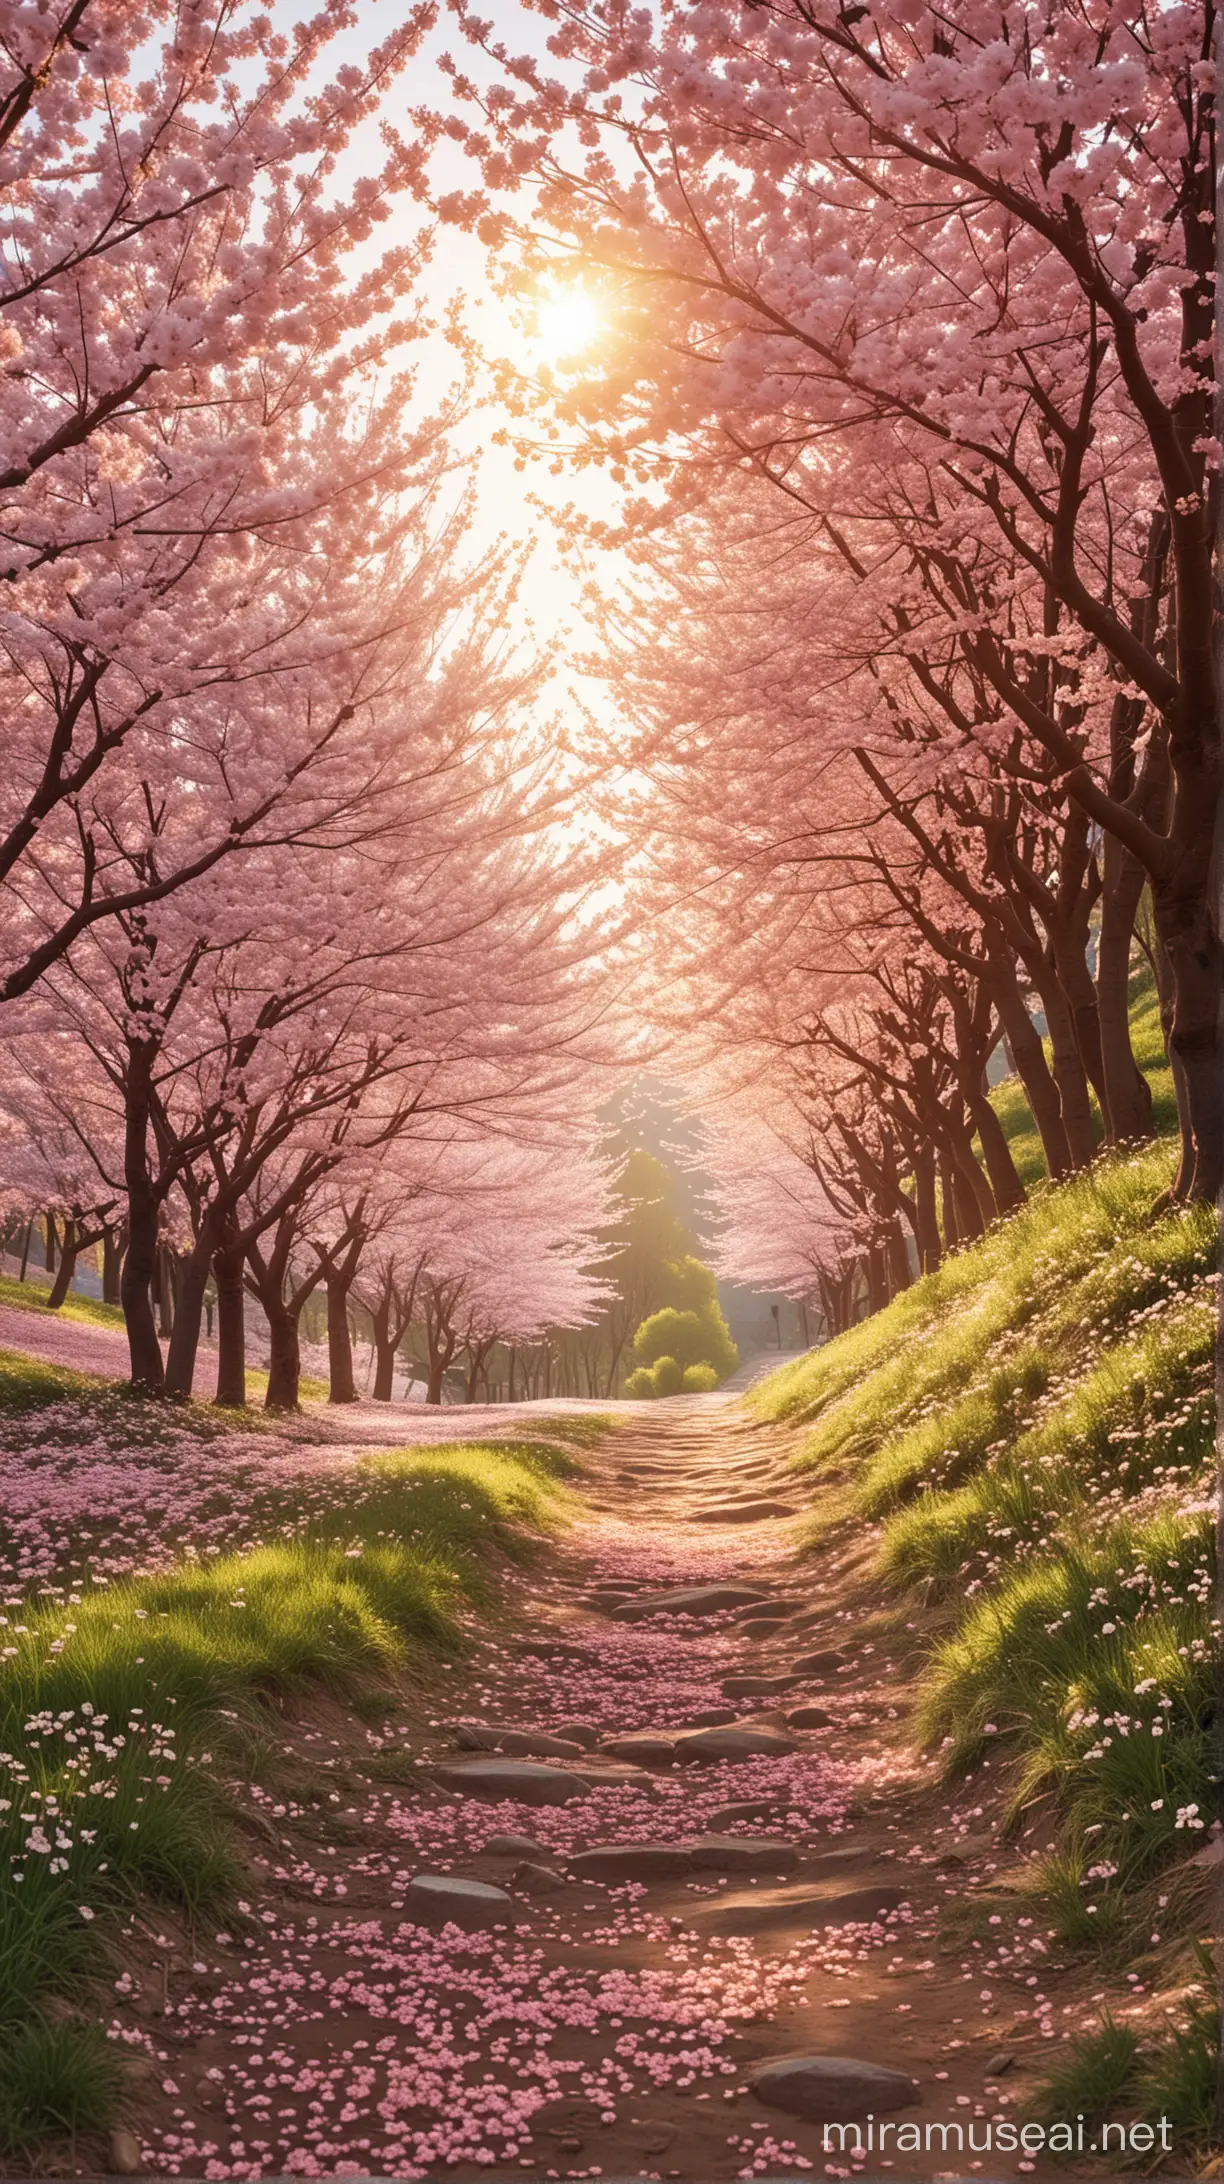 Serene Cherry Blossom Hill with Sunlight Filtering Through Petals